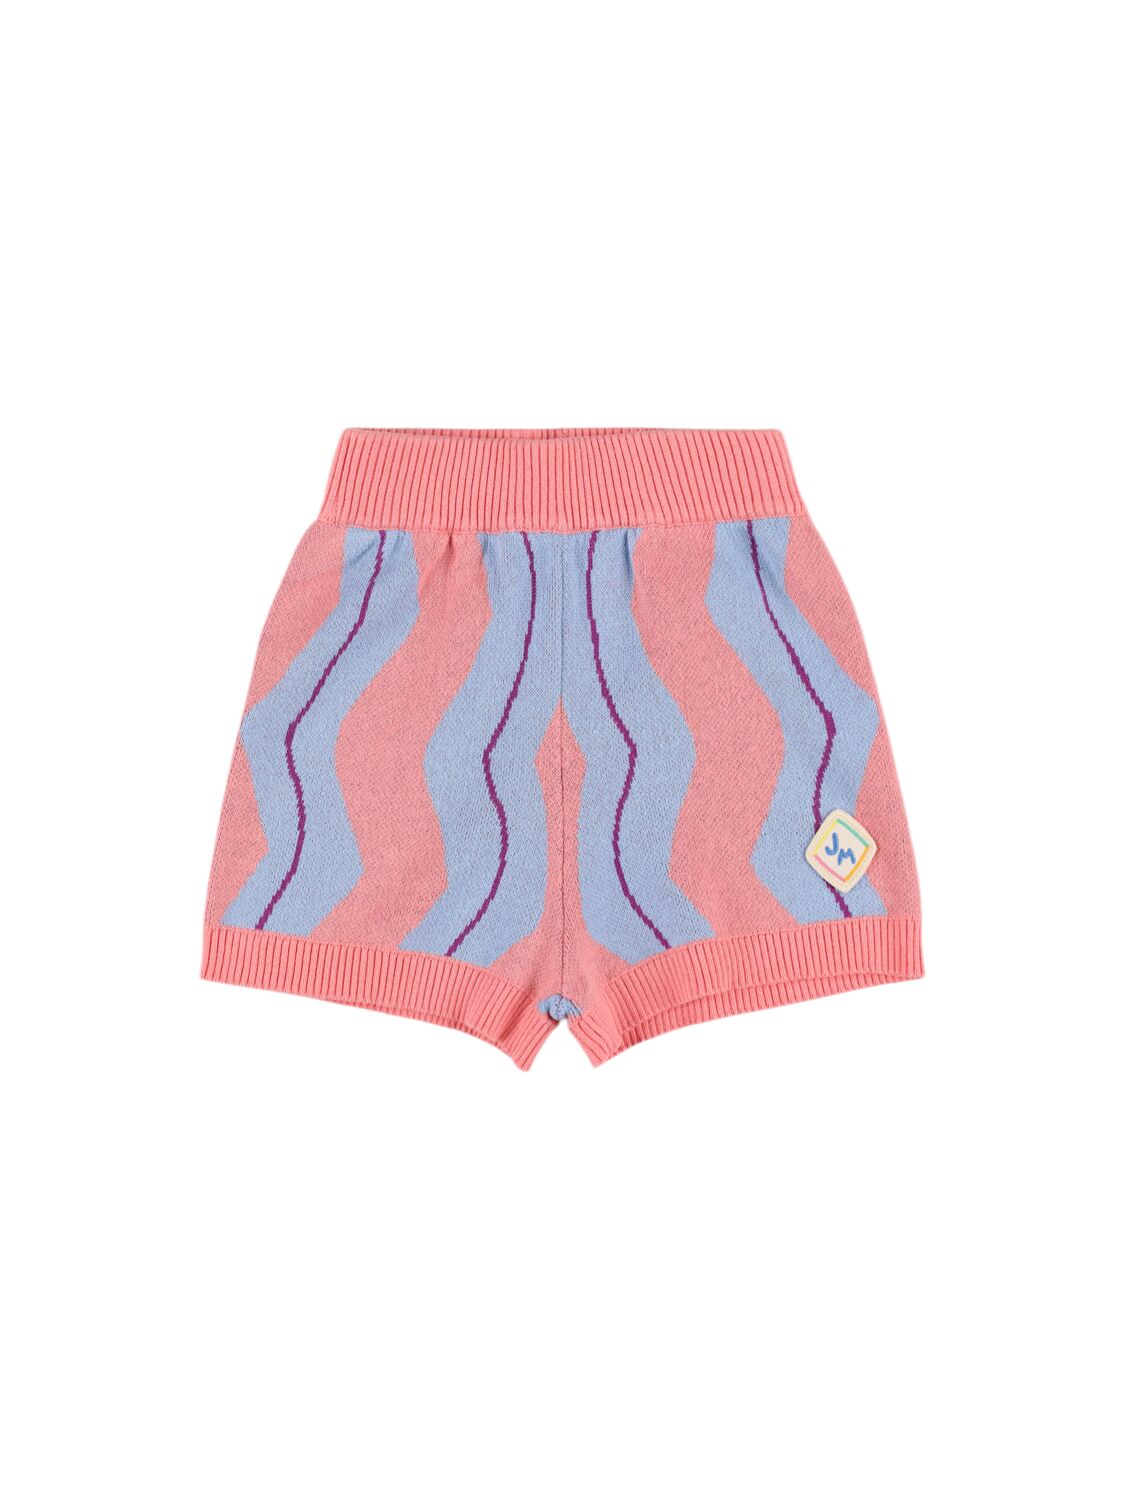 Image of Cotton Knit Shorts